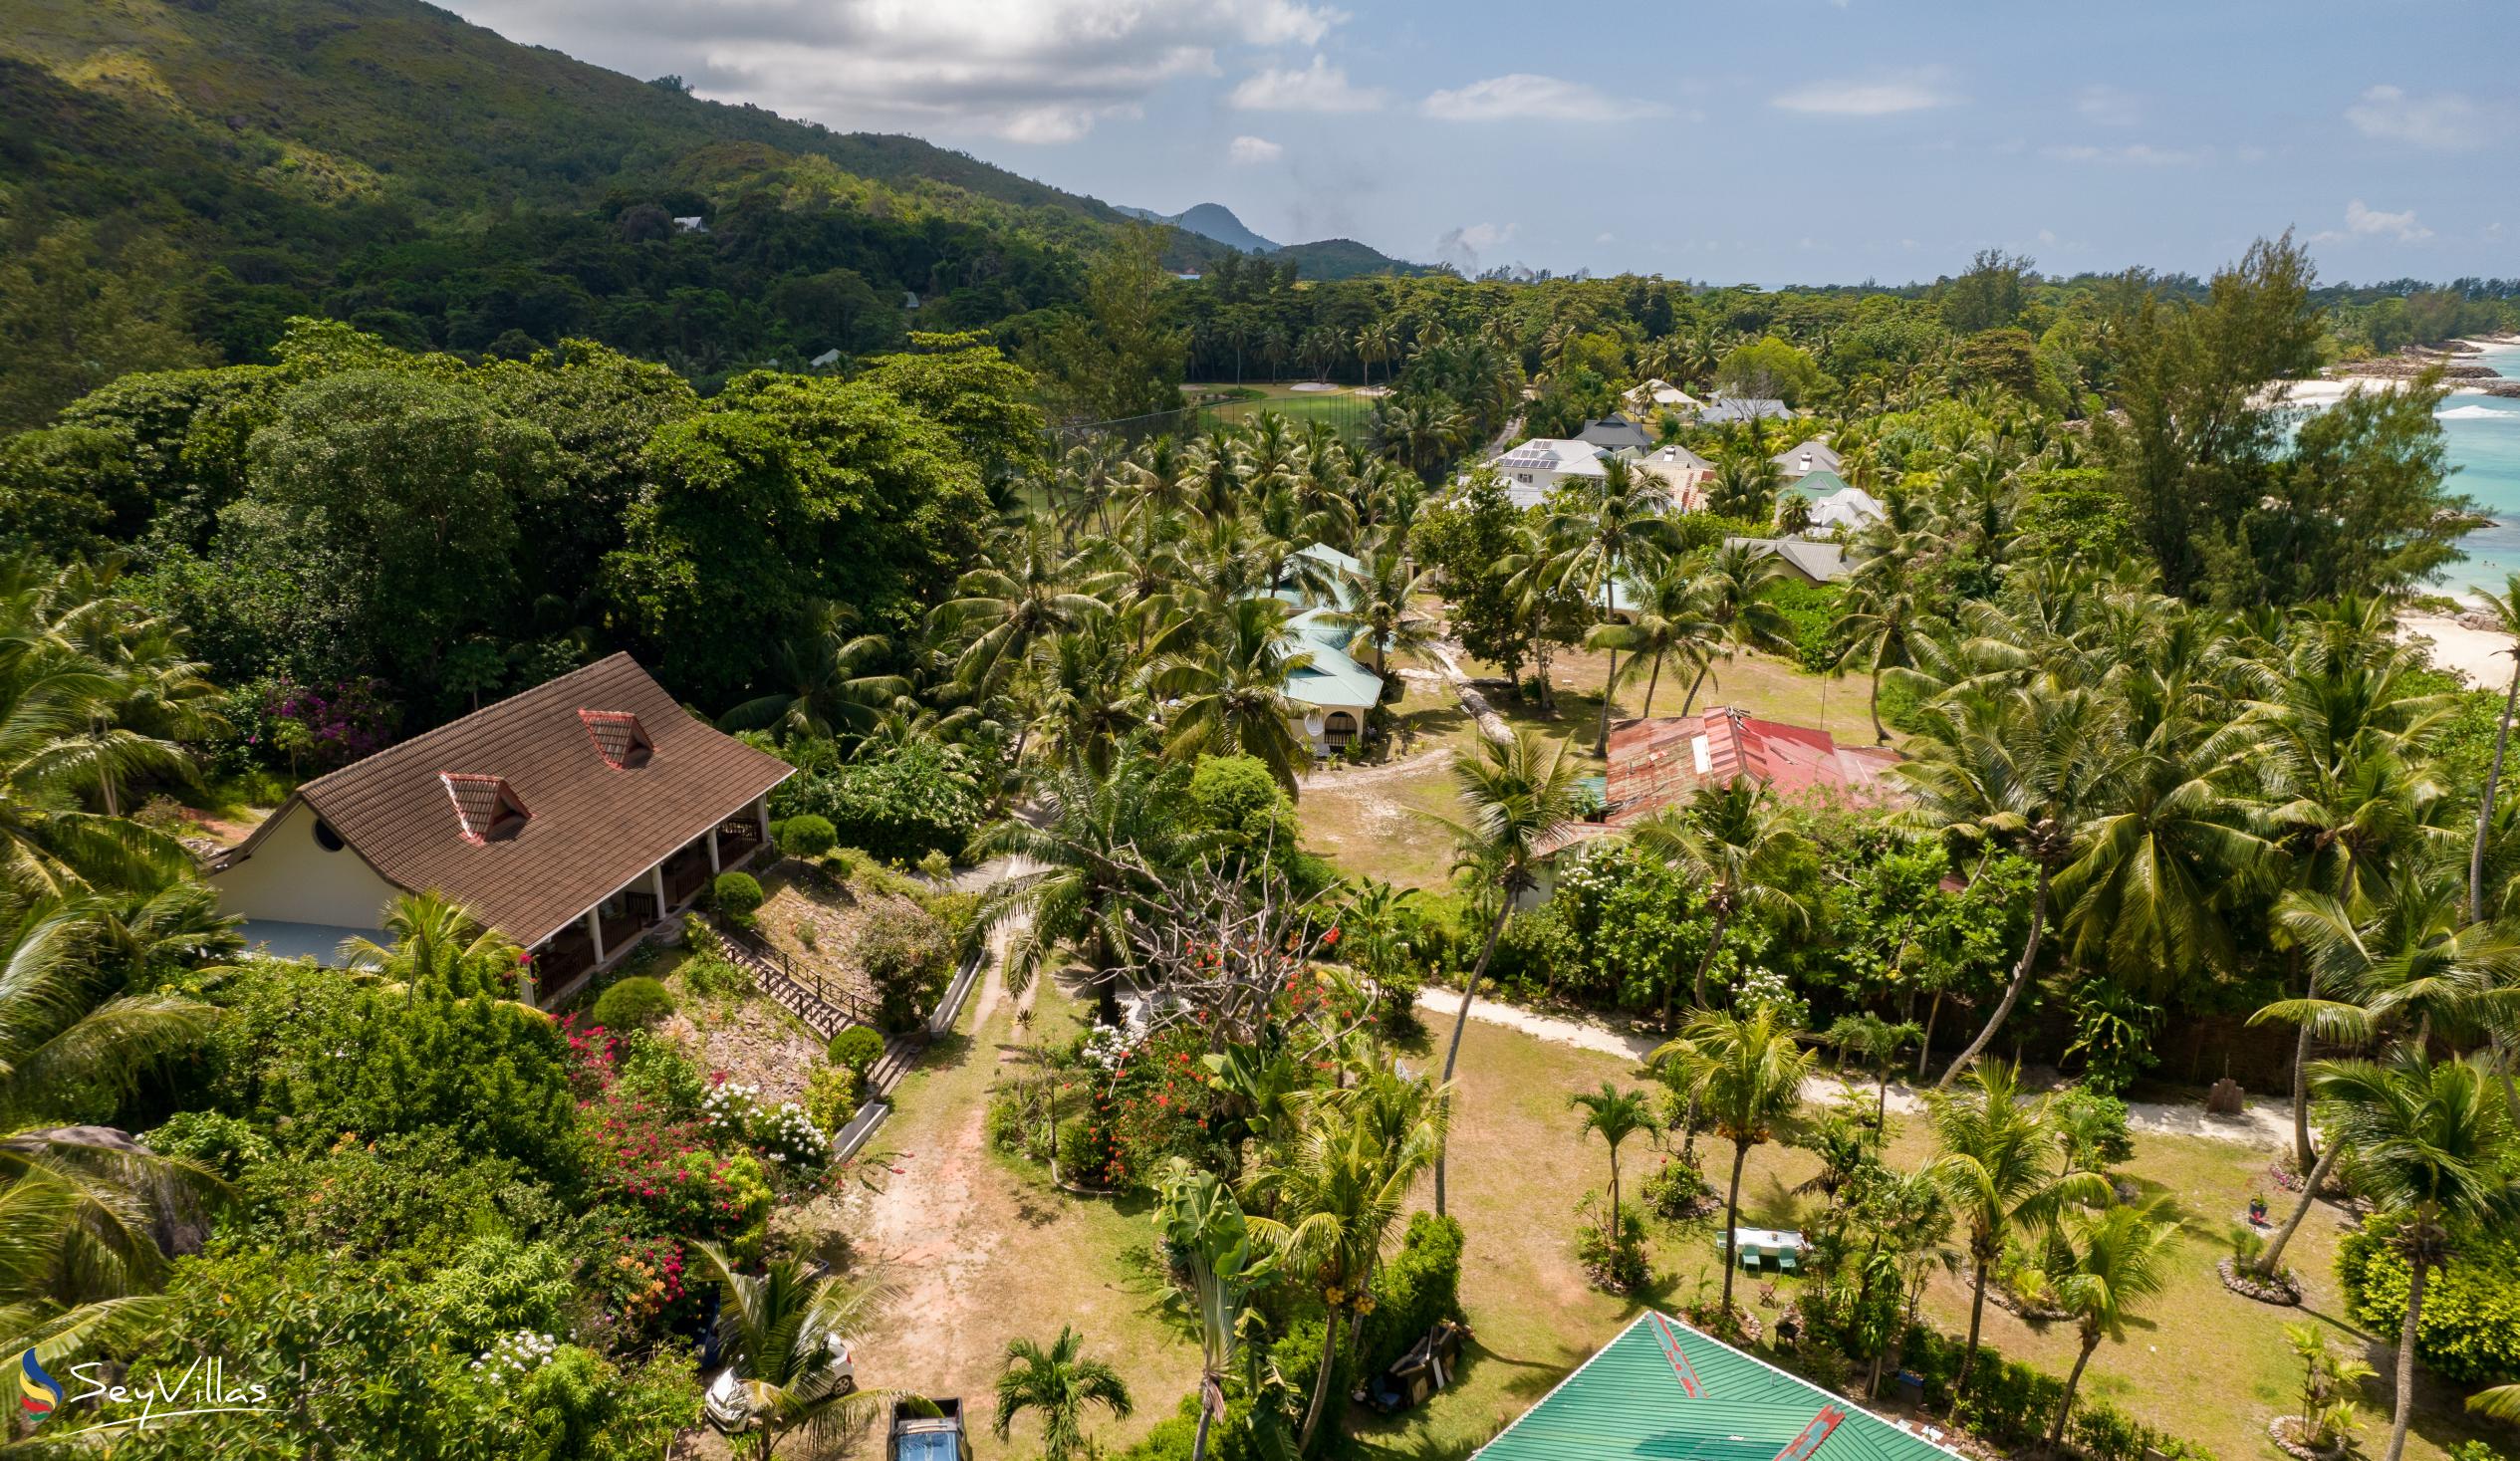 Photo 5: Villas du Voyageur - Outdoor area - Praslin (Seychelles)